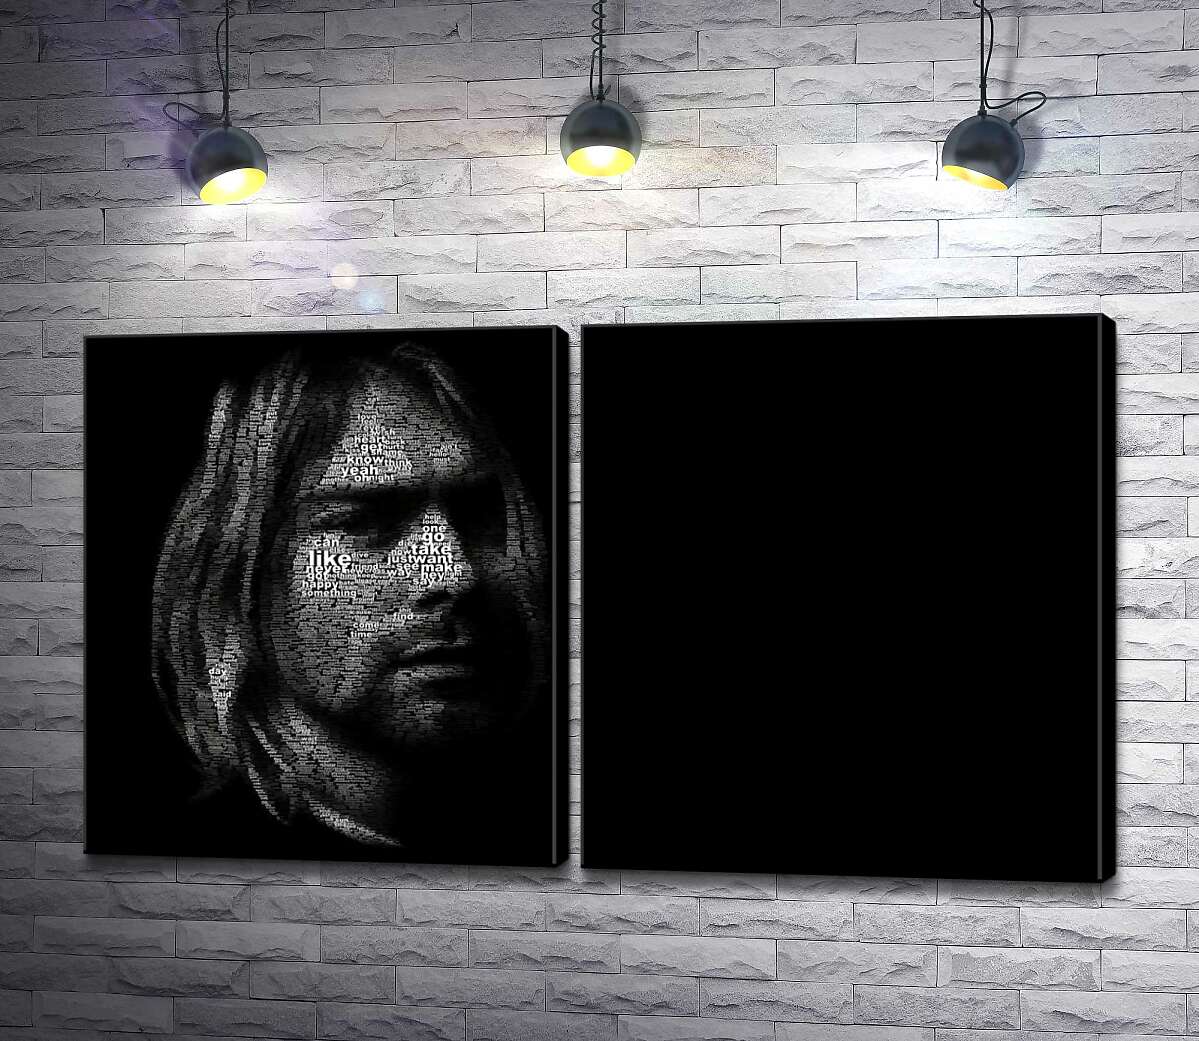 модульная картина Силуэт музыканта Курта Кобейна (Kurt Cobain) из строк песен